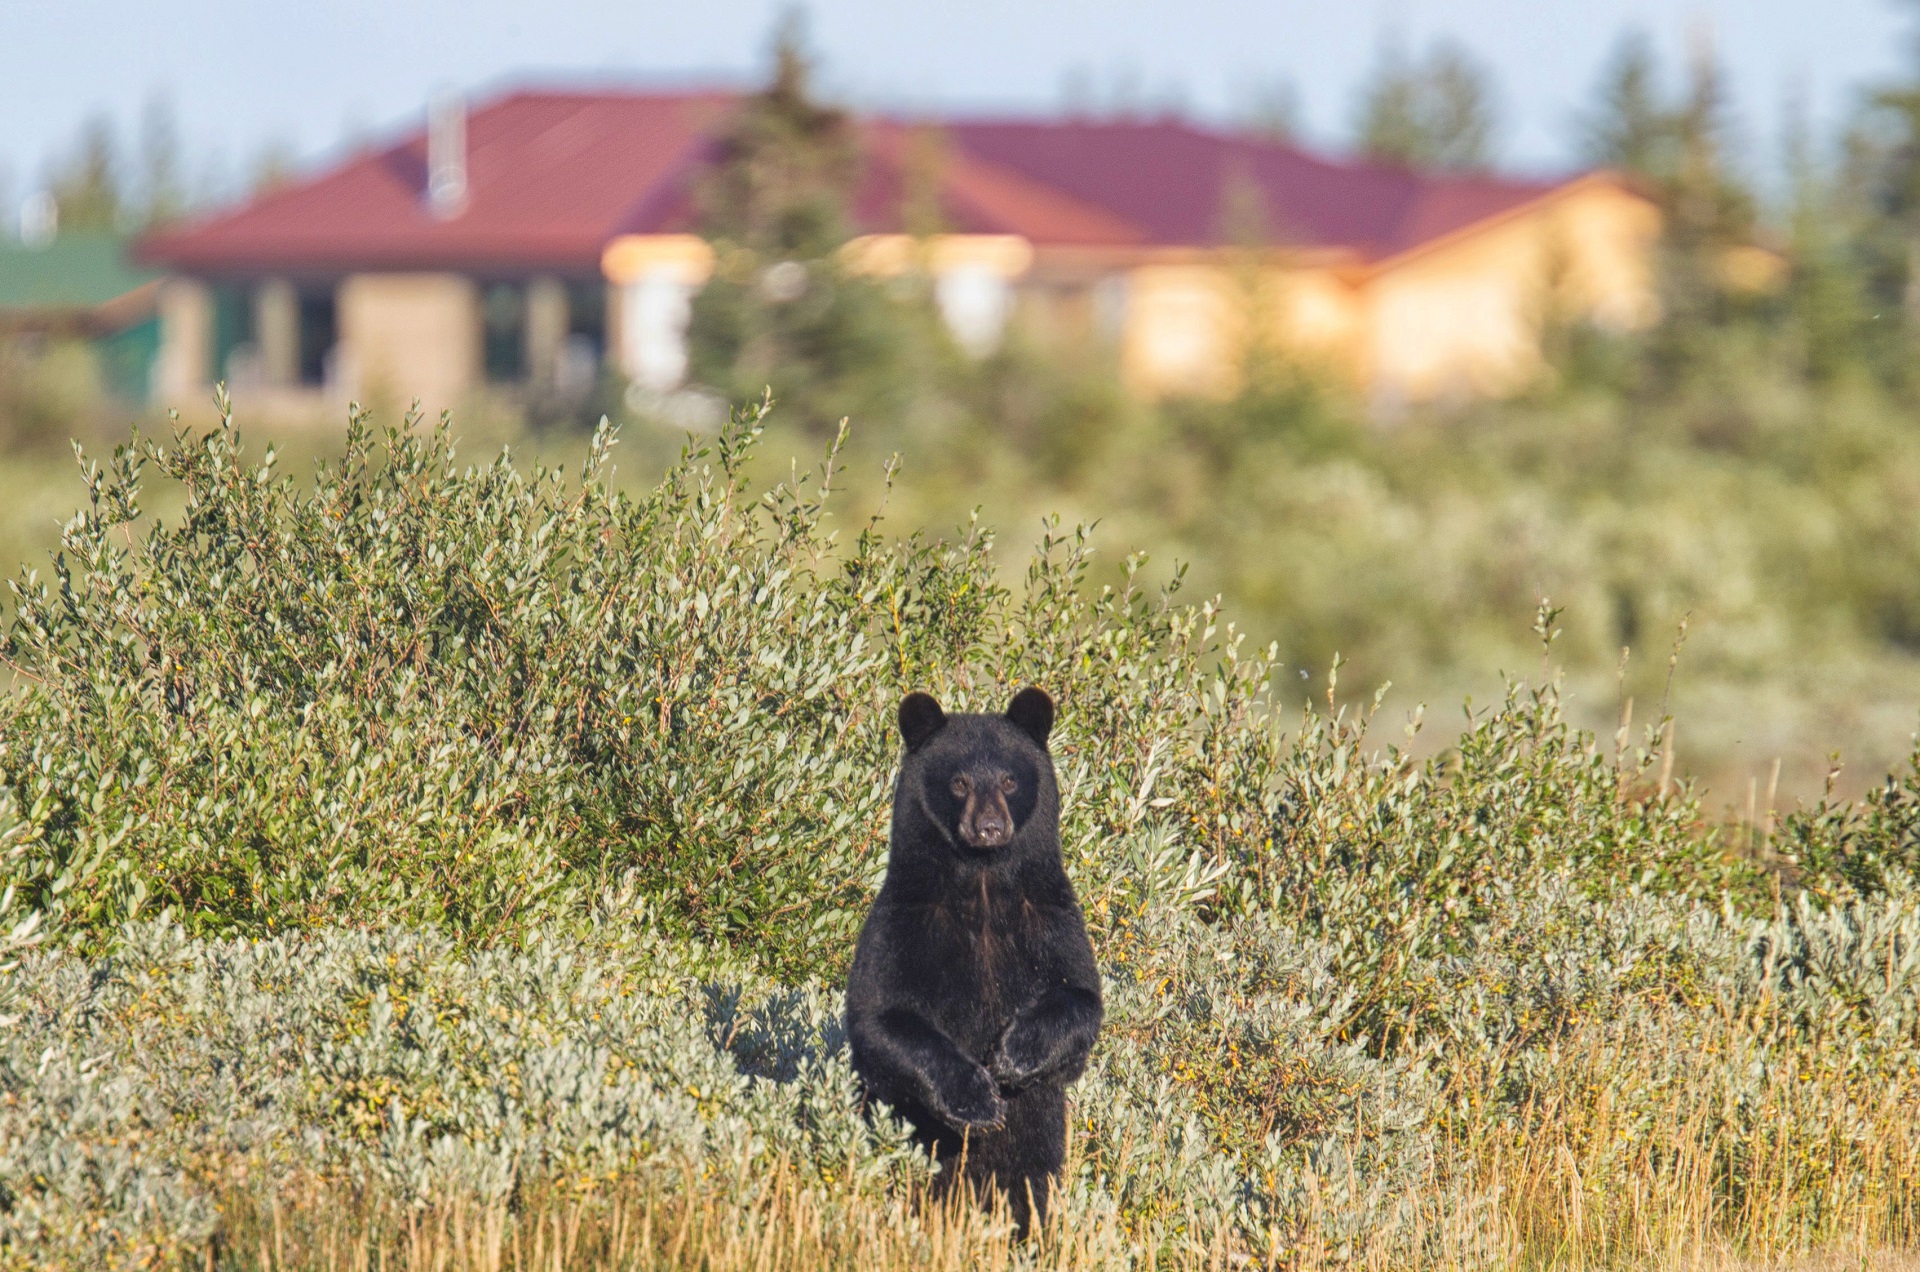 Black bear at Nanuk Polar Bear Lodge. Robert Postma photo.